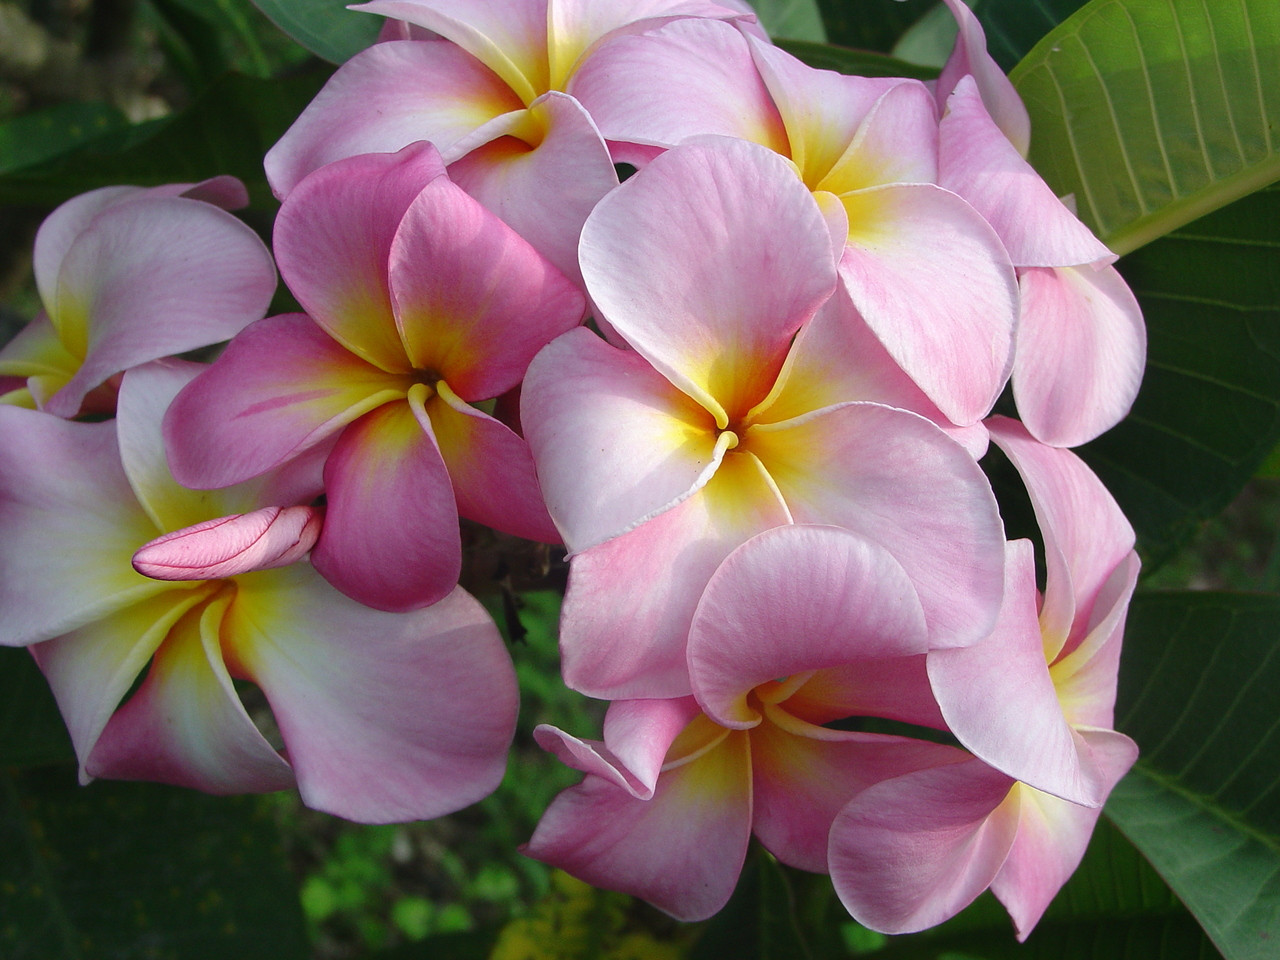 Maui Beauty Plumeria - Plumeria by Florida Colors Nursery